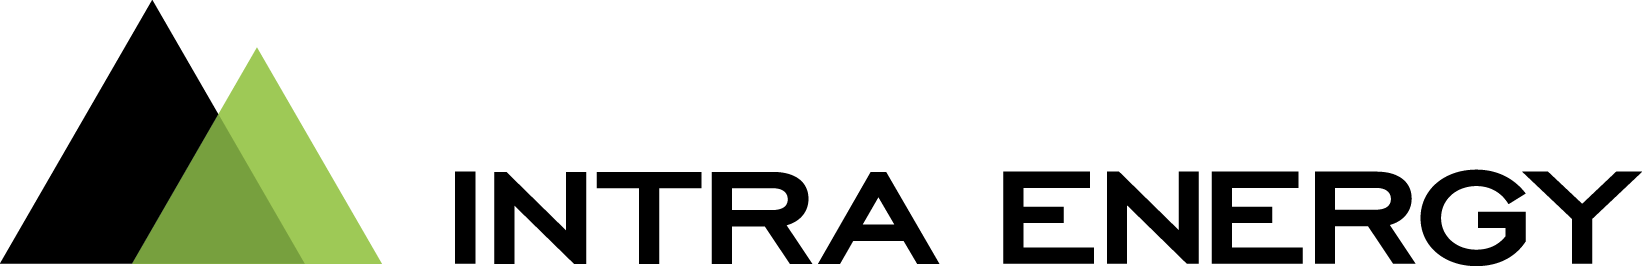 Intra Energy Corporation Limited (IEC:ASX) logo